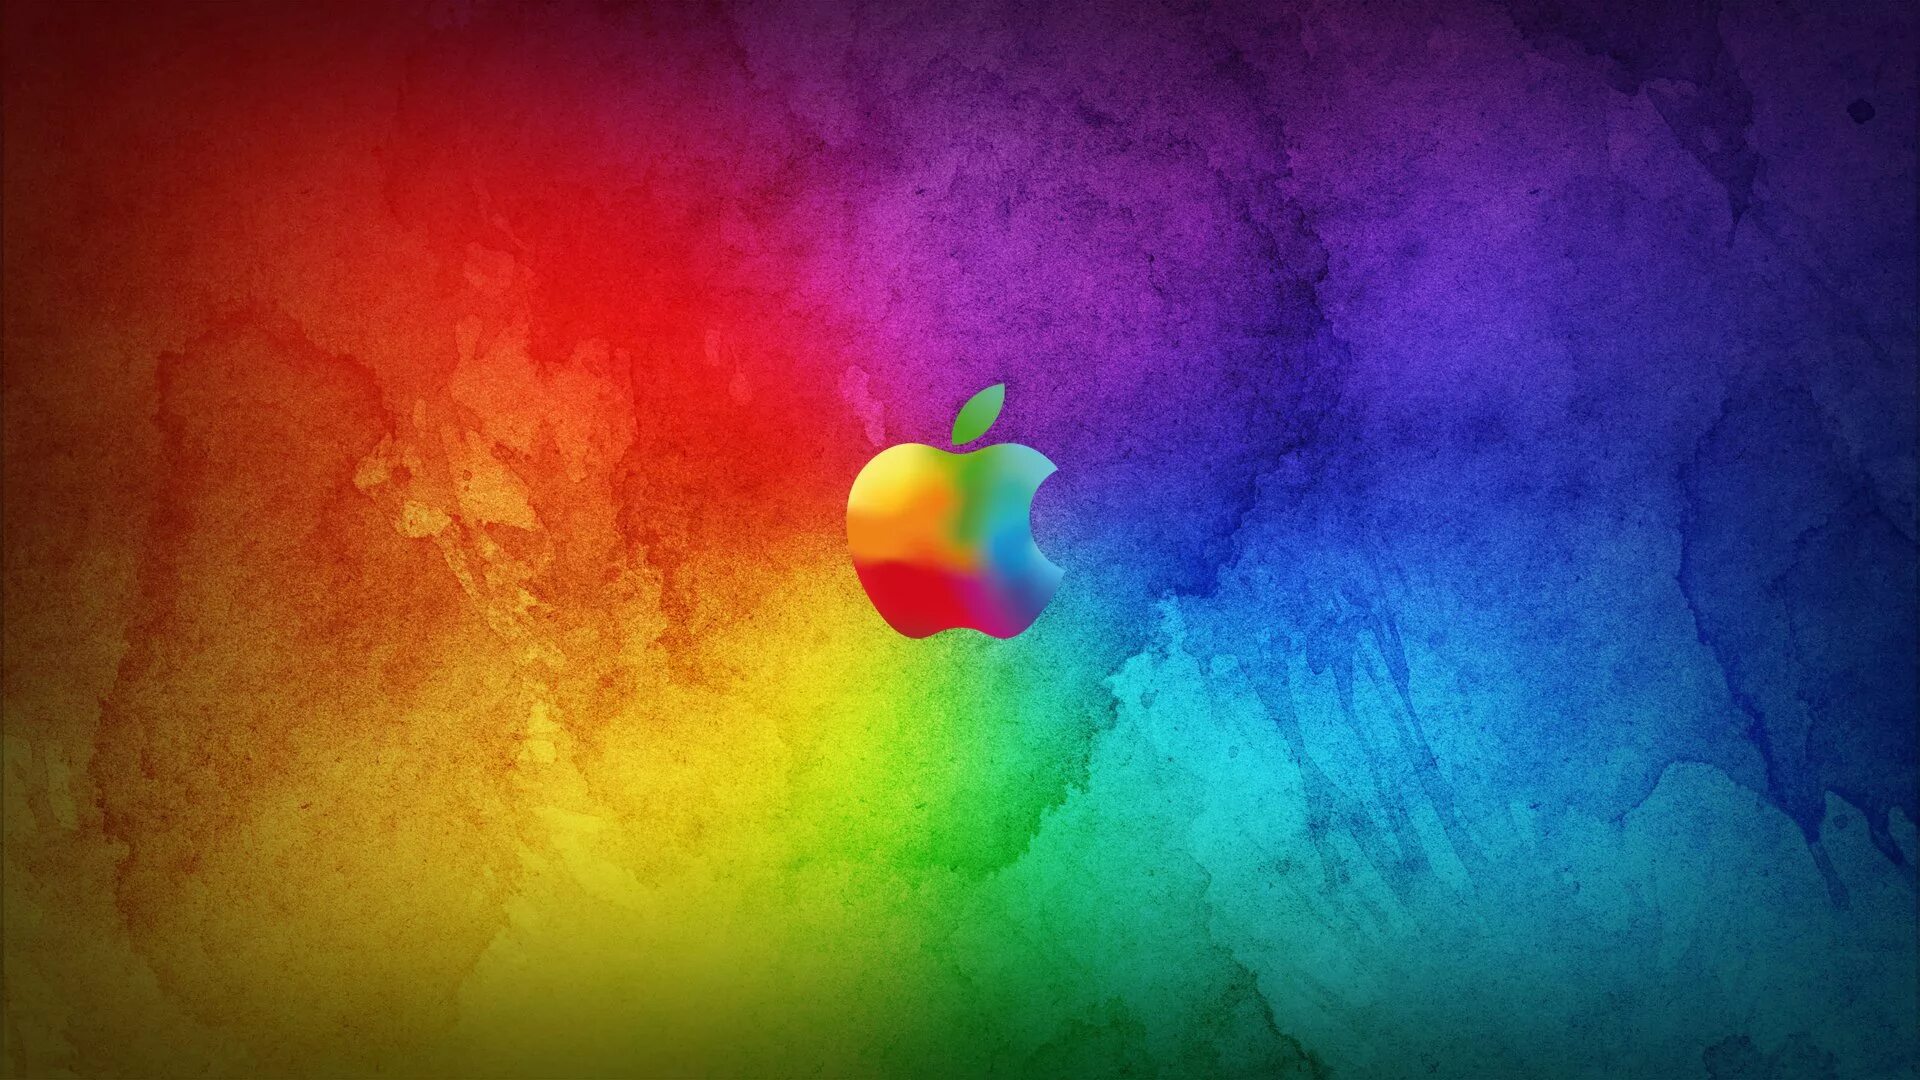 Обои эппл. Обои Apple. Фон для Айпада. Красивый фон для Айпада. Фон Apple для рабочего стола.